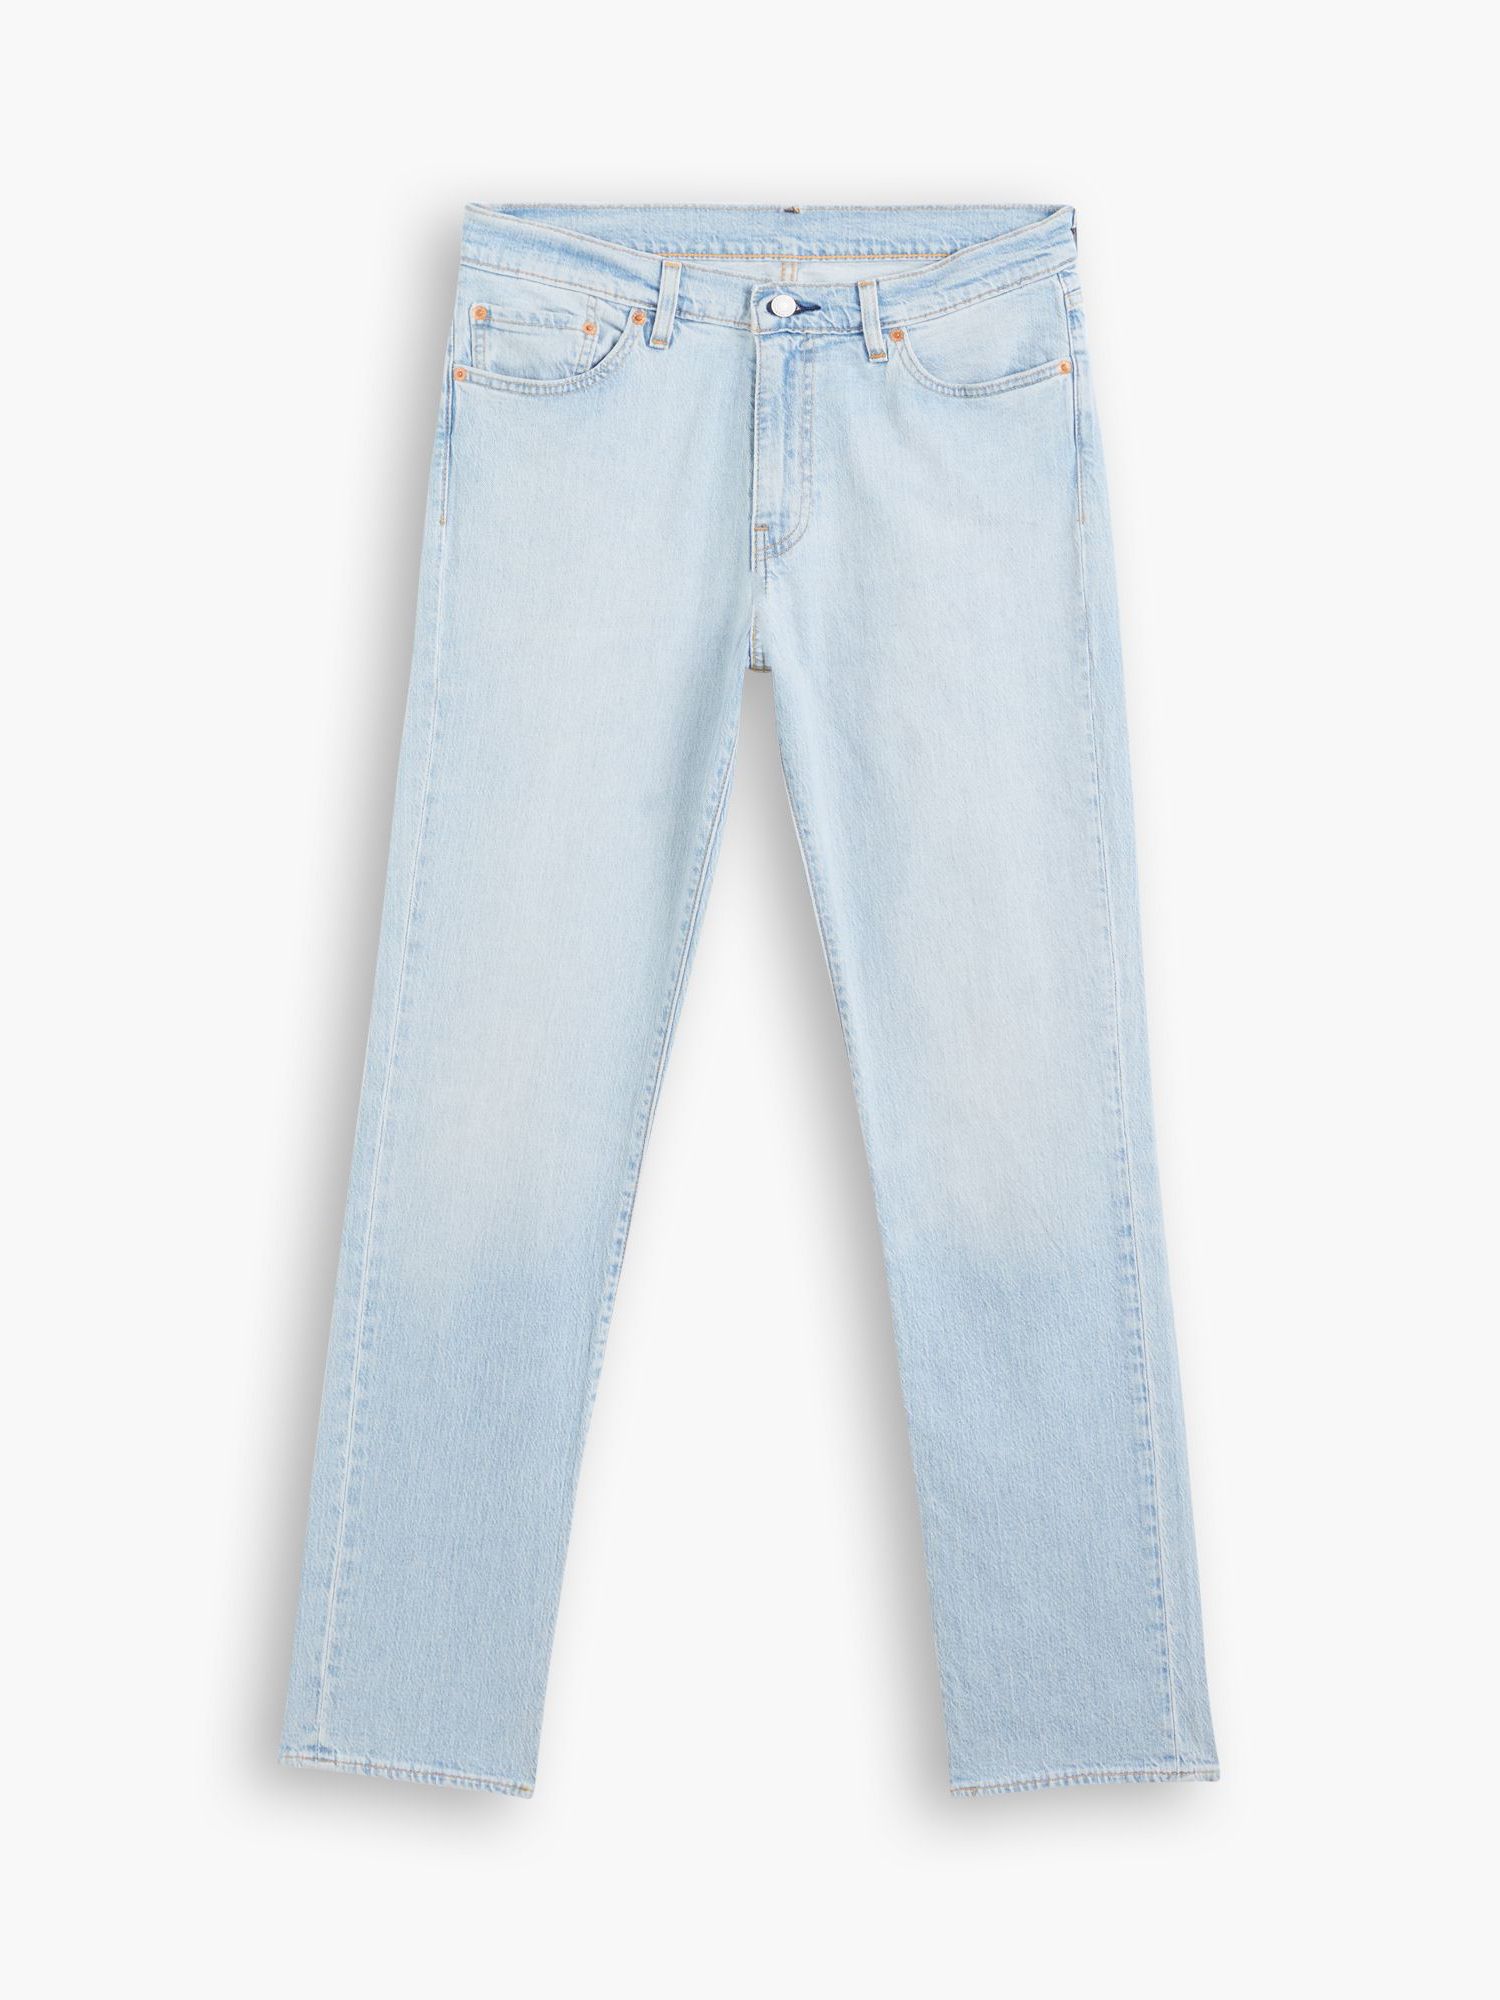 Levi's 511 Slim Jeans, Indigo Worn In